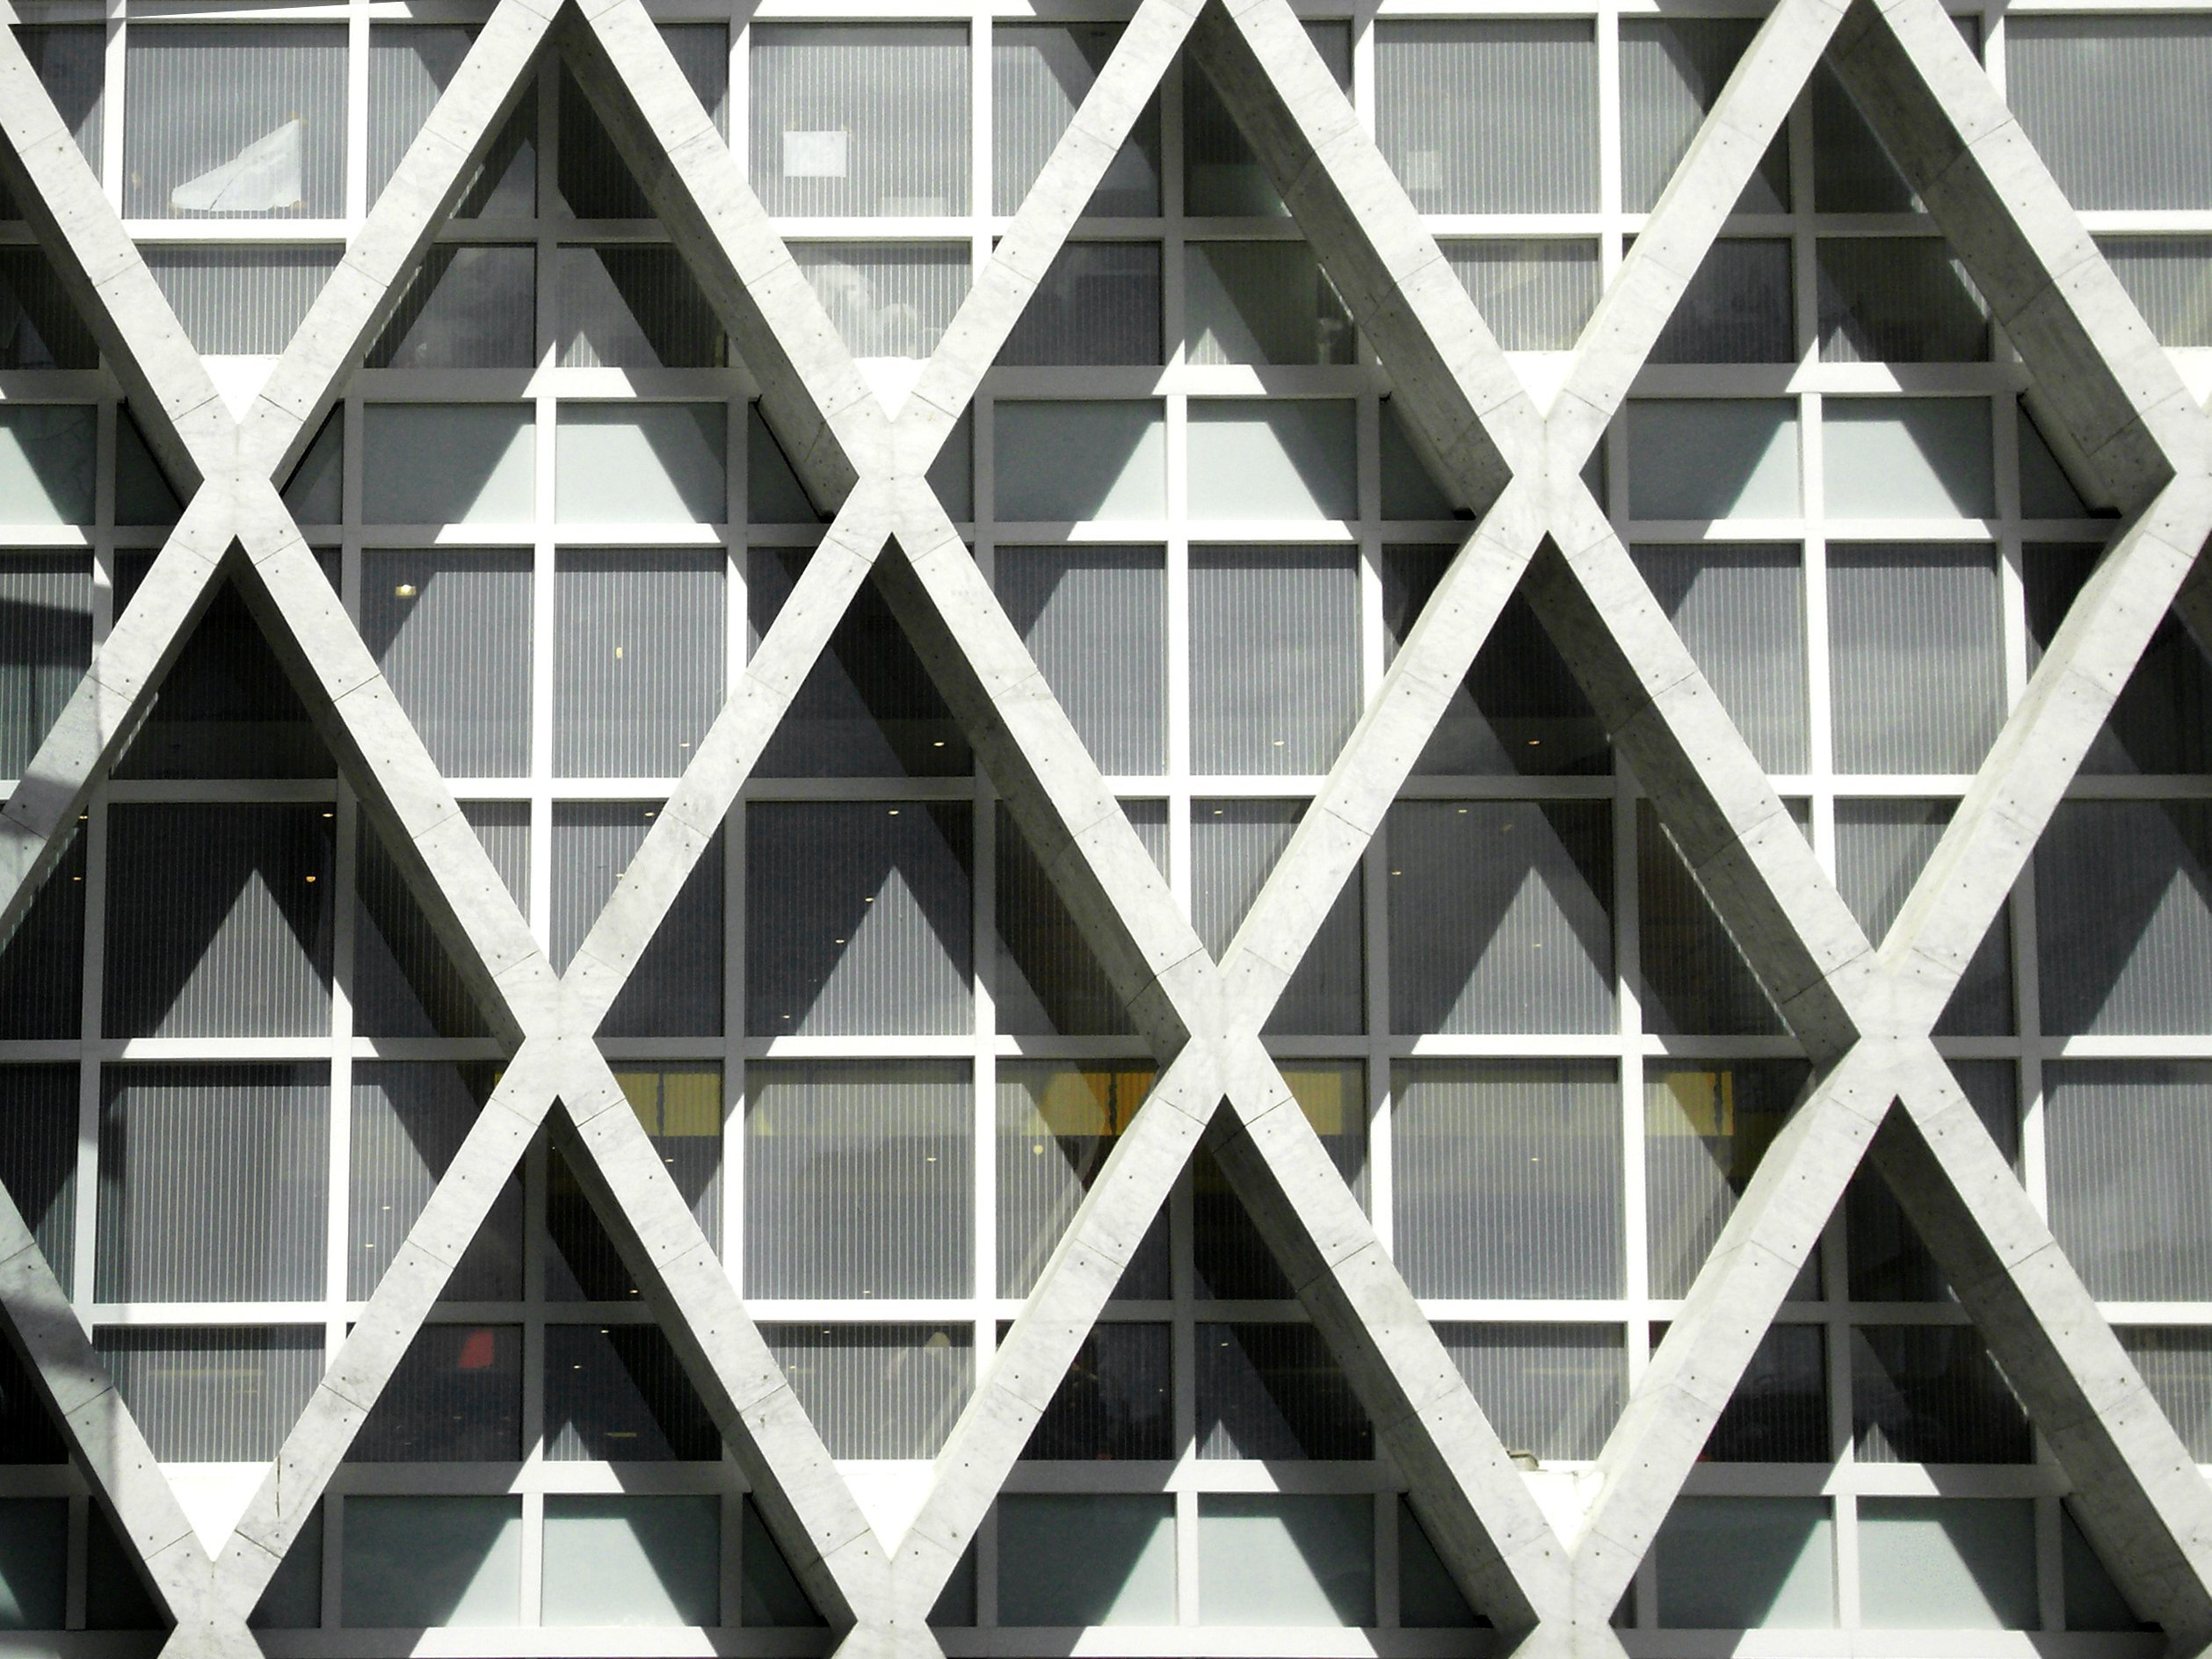 Architecture patterns. Архитектурная решетка. Стеклянный фасад здания. Решетки в архитектуре. Текстура фасада здания.